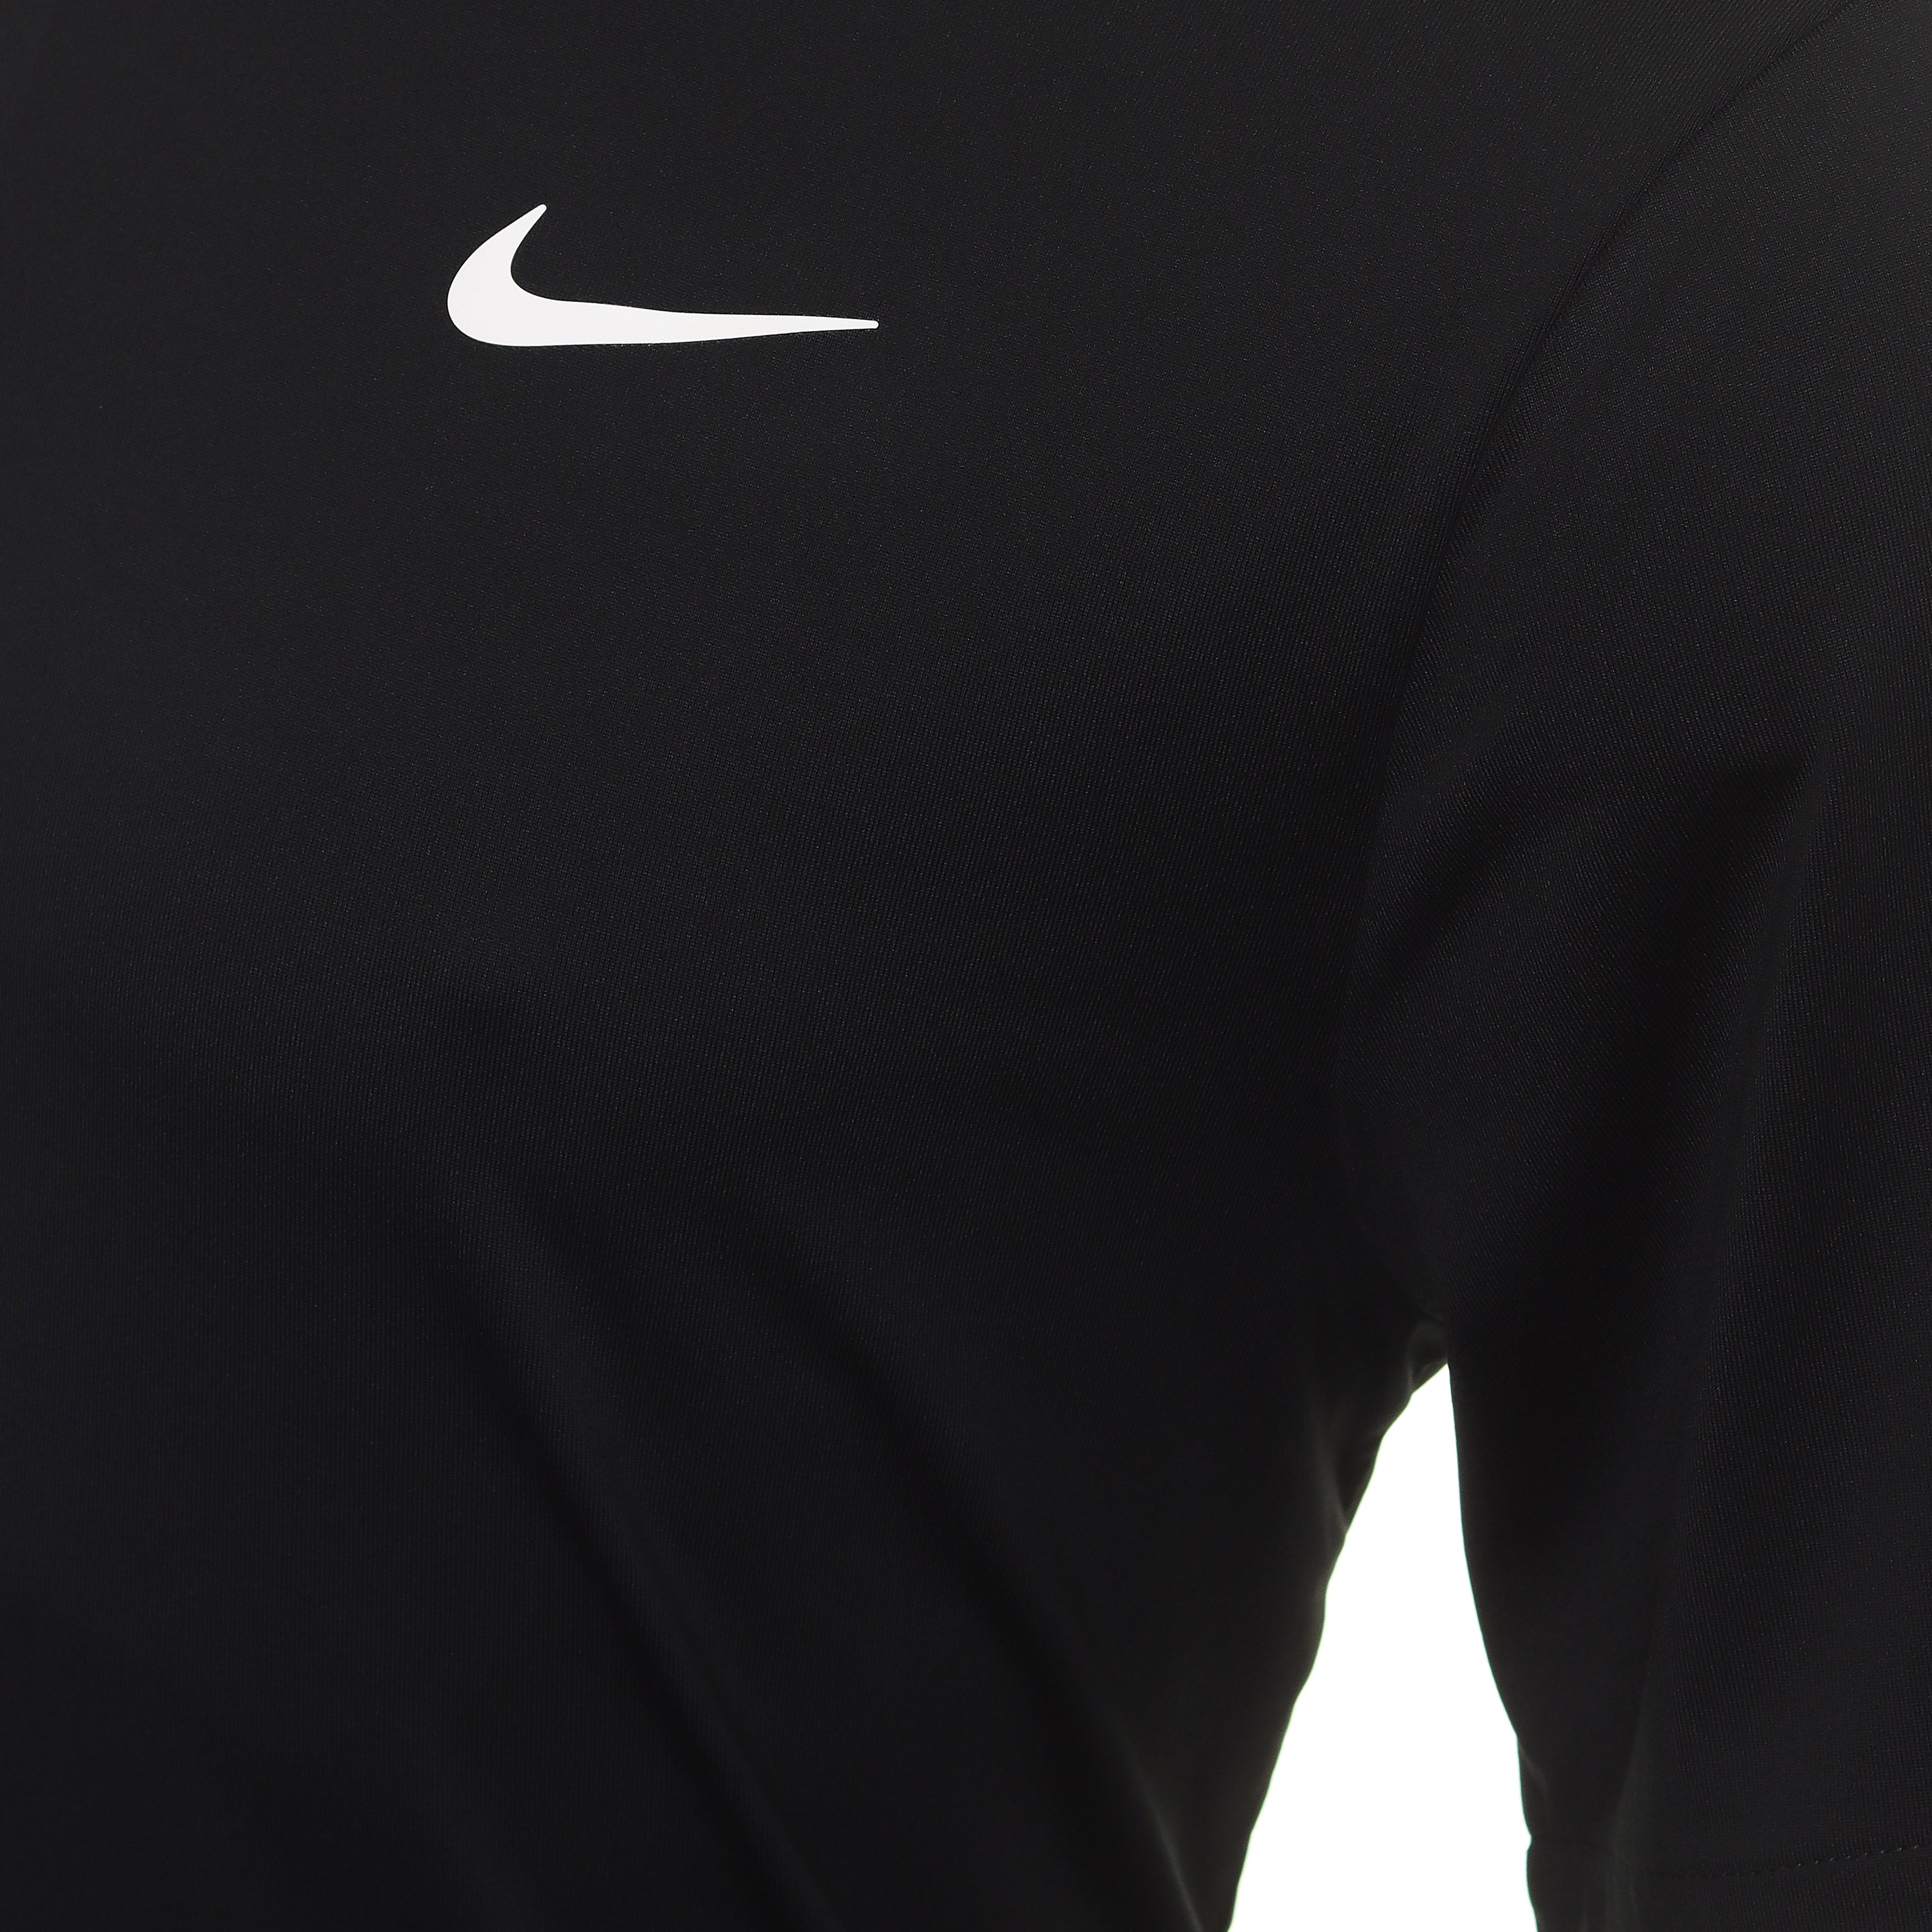 Nike Golf Dri-Fit Tour Solid Shirt DR5298 Black 010 | Function18